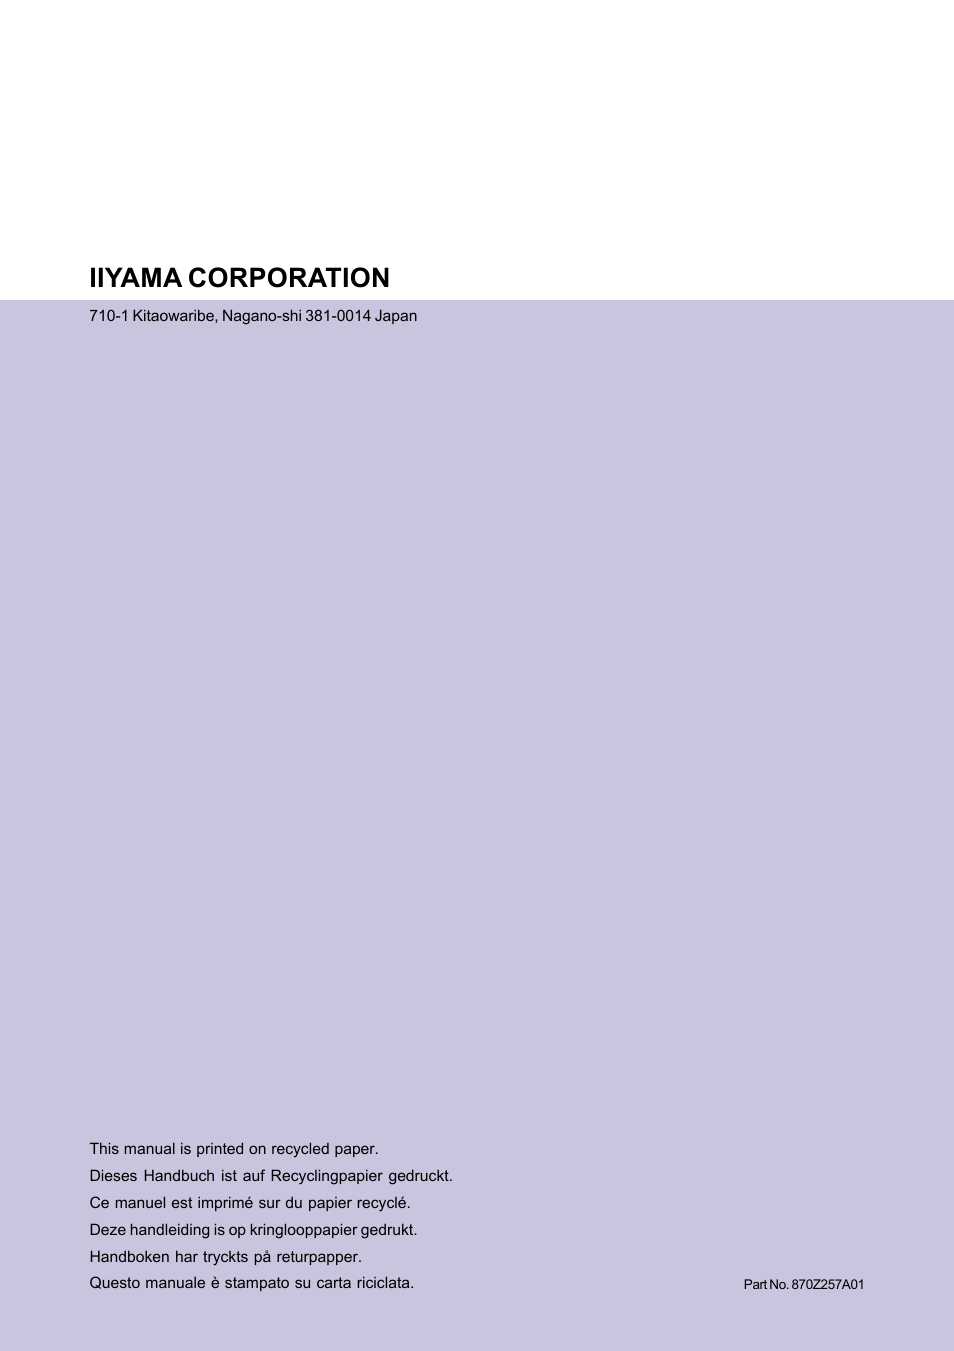 Iiyama corporation | Iiyama MA203DT D User Manual | Page 21 / 21